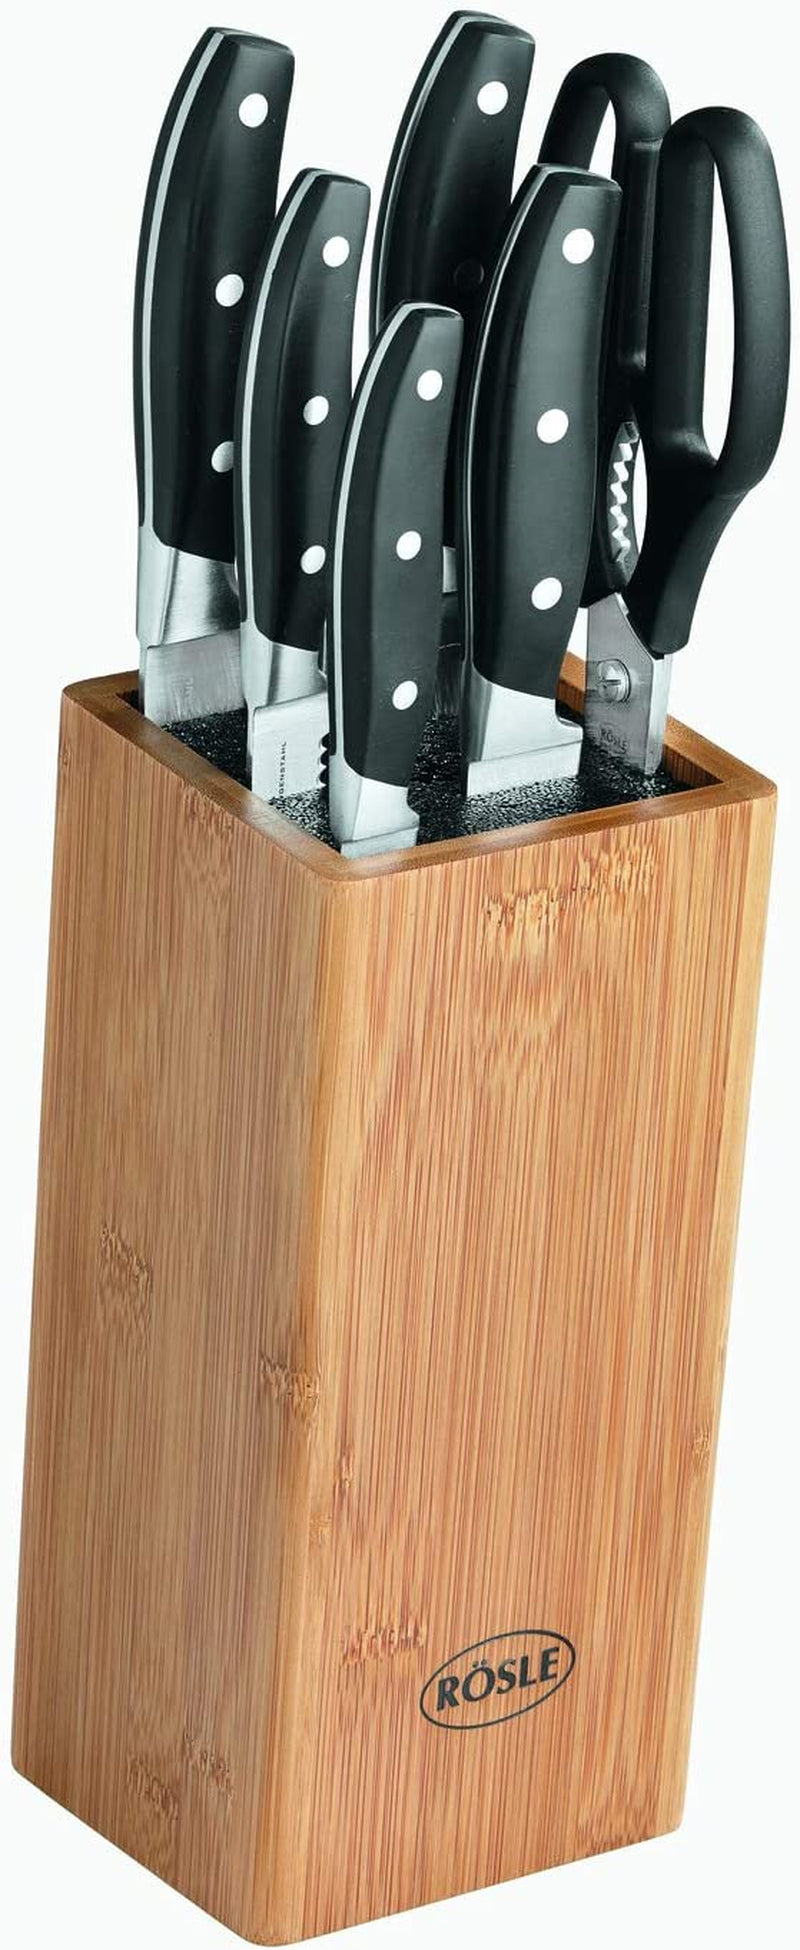 Rösle German Knife Set in Bamboo Block, 5-Piece Set plus Scissors Home & Garden > Kitchen & Dining > Kitchen Tools & Utensils > Kitchen Knives Rösle   